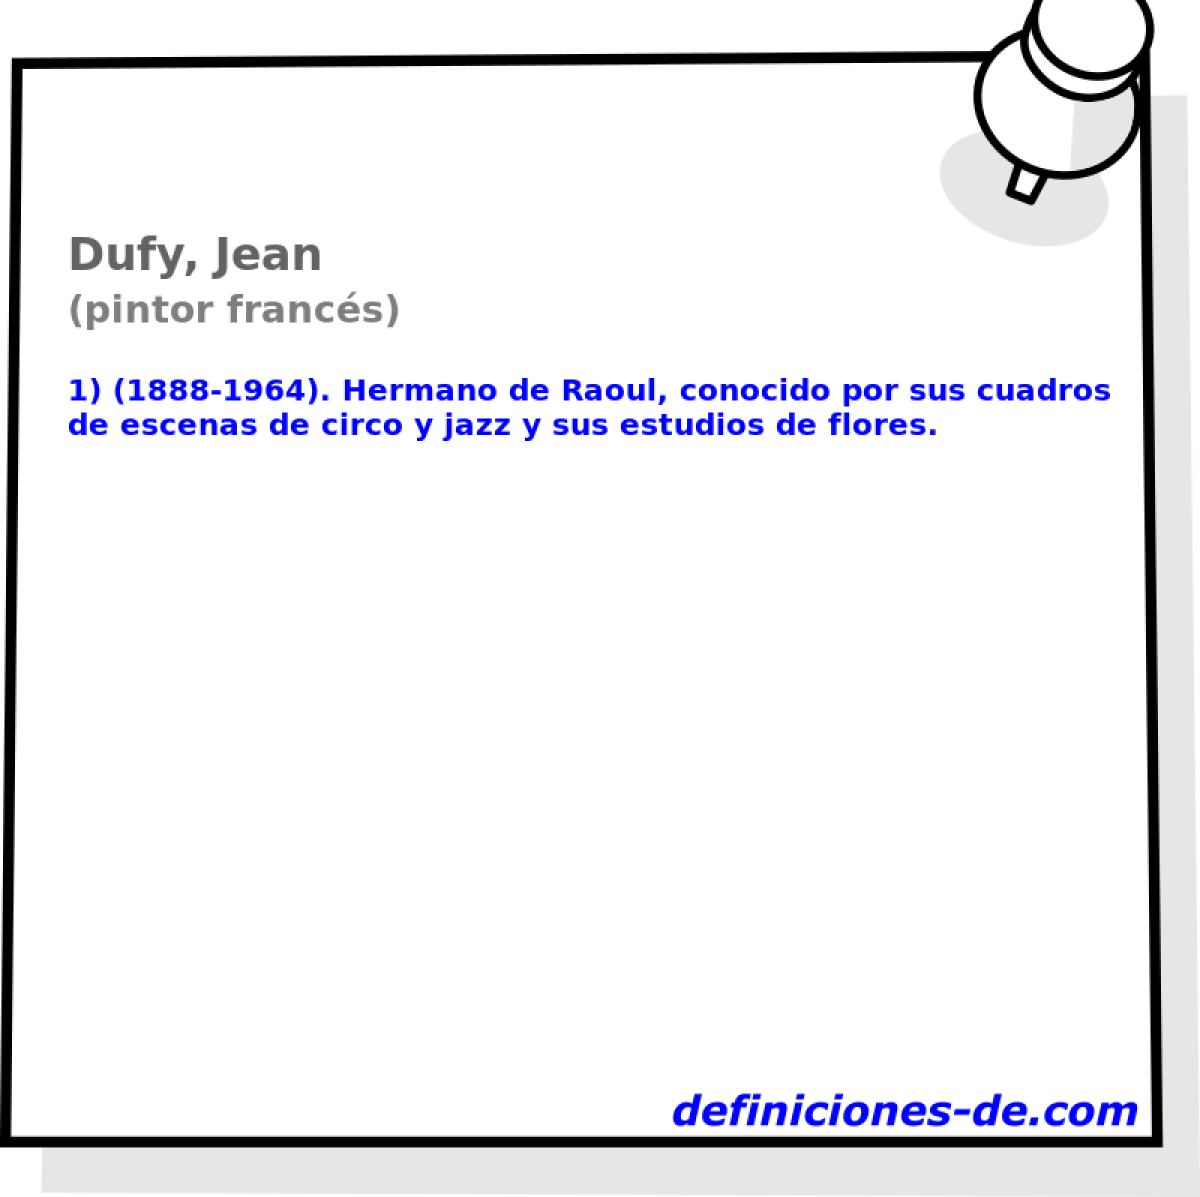 Dufy, Jean (pintor francs)